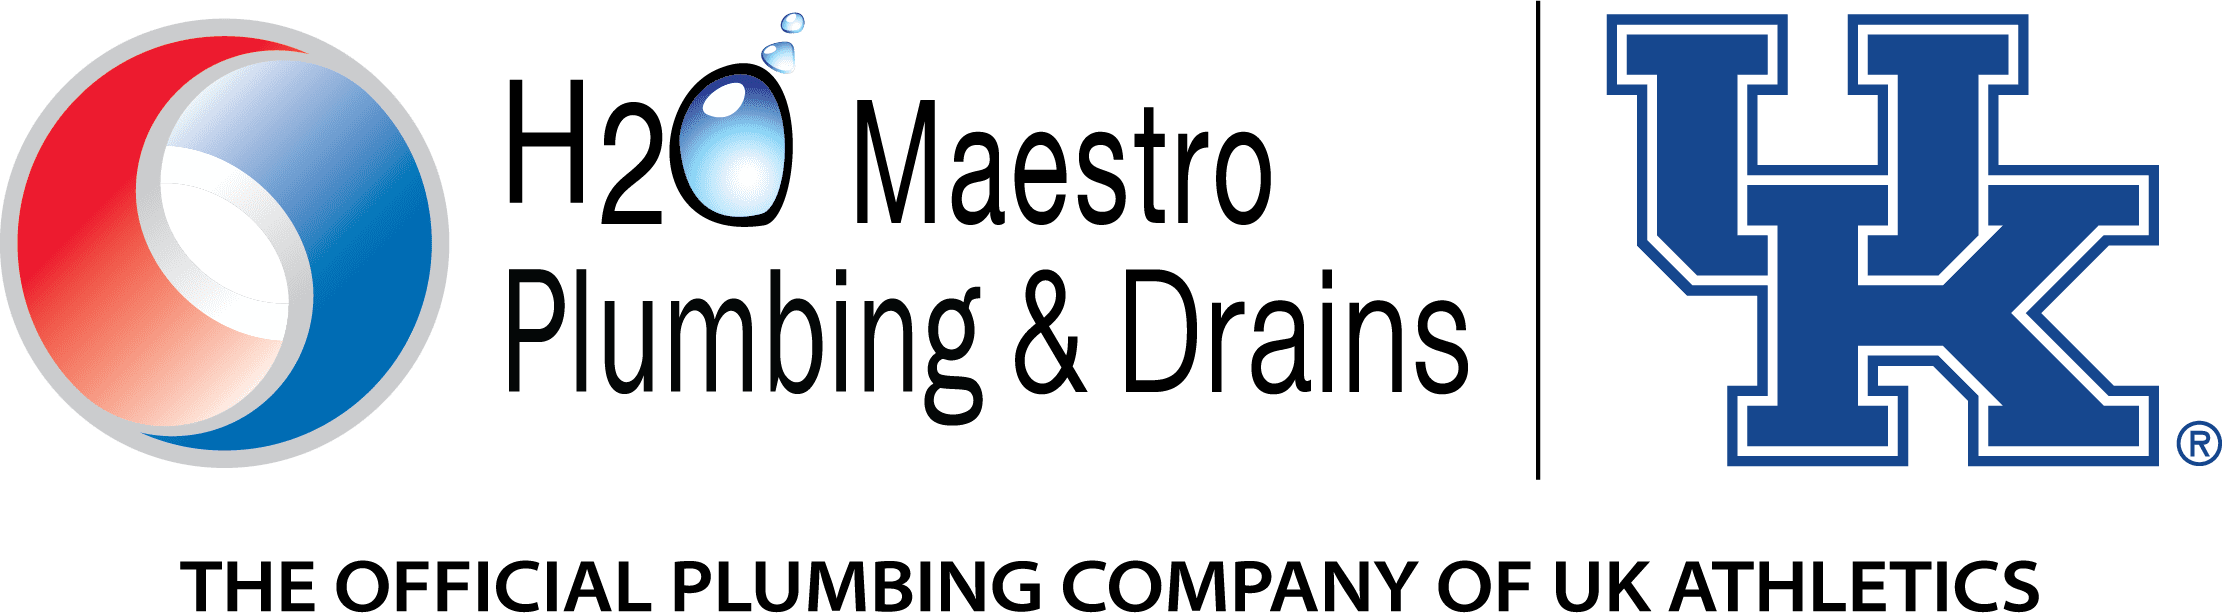 H2o Maestro logo